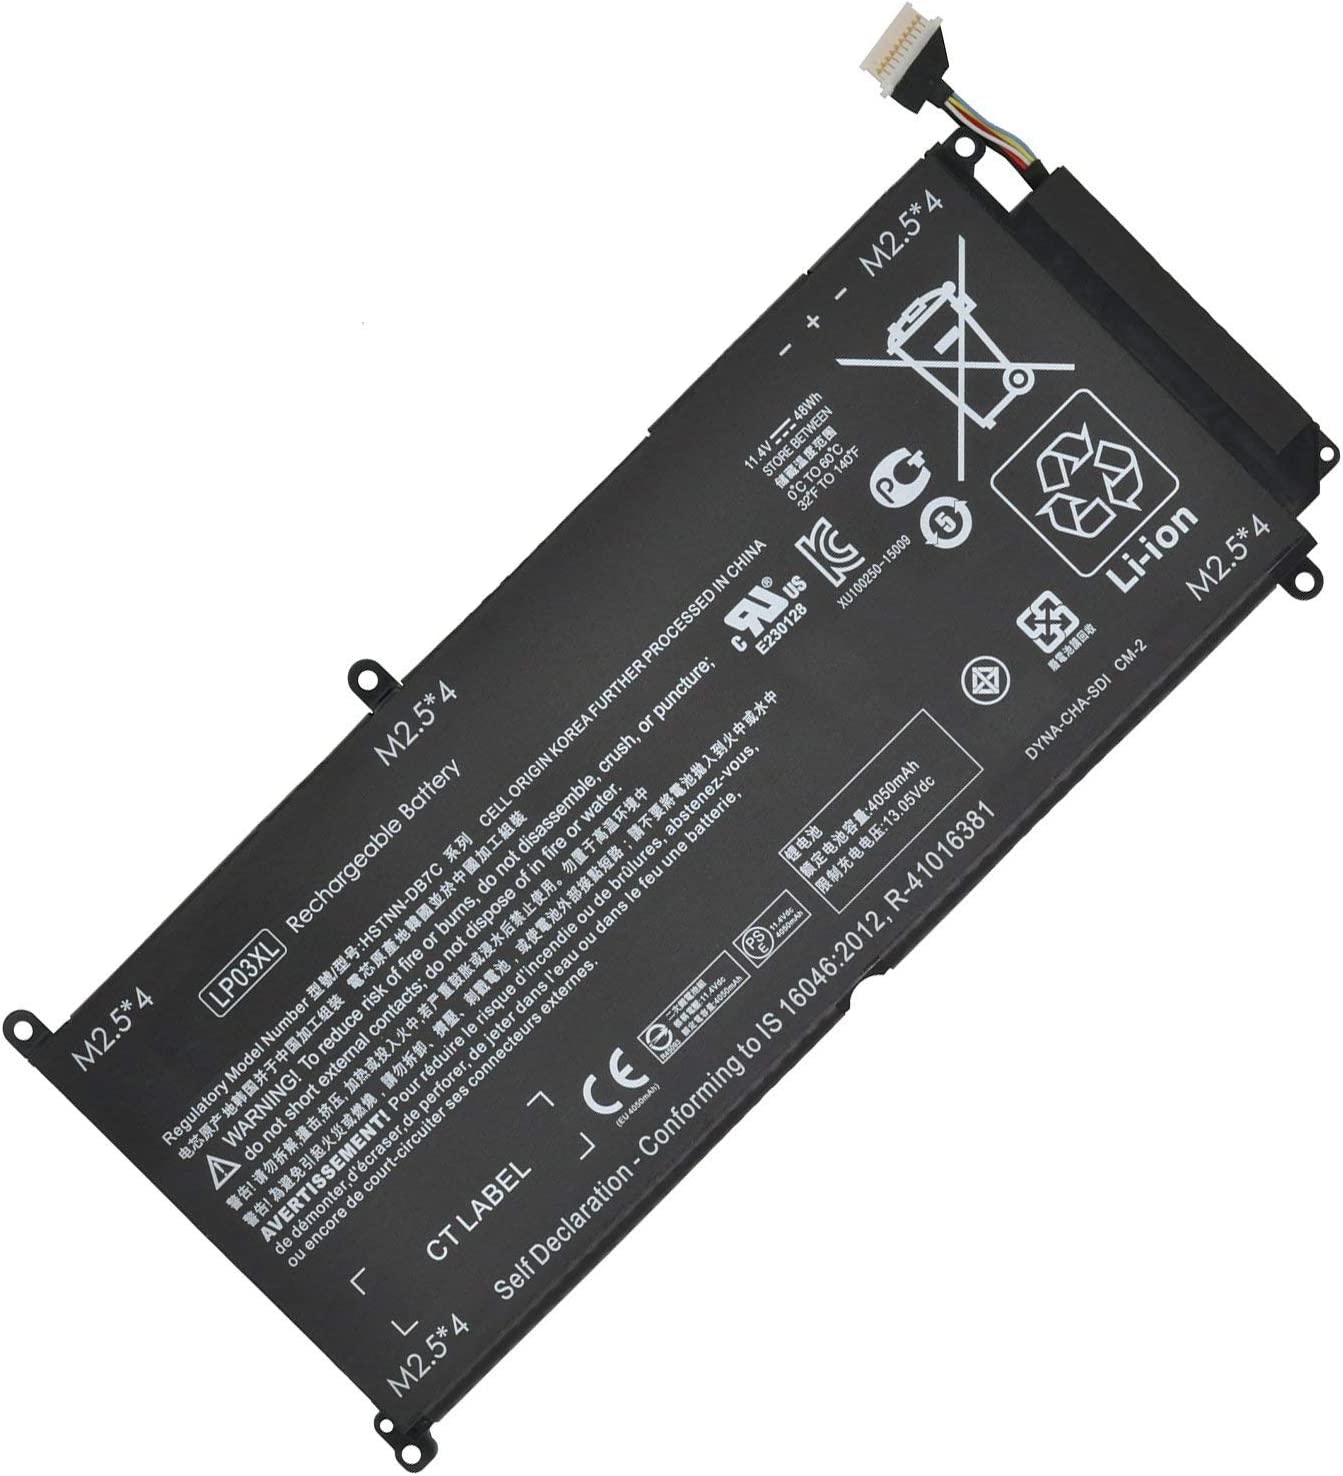 Batería para HP LP03XL HSTNN-DB6X 805094-005 804072-241 HSTNN-DB7C TPN-C121 TPN-C122 TPN-C124 LP03048XL 805094-005(compatible)